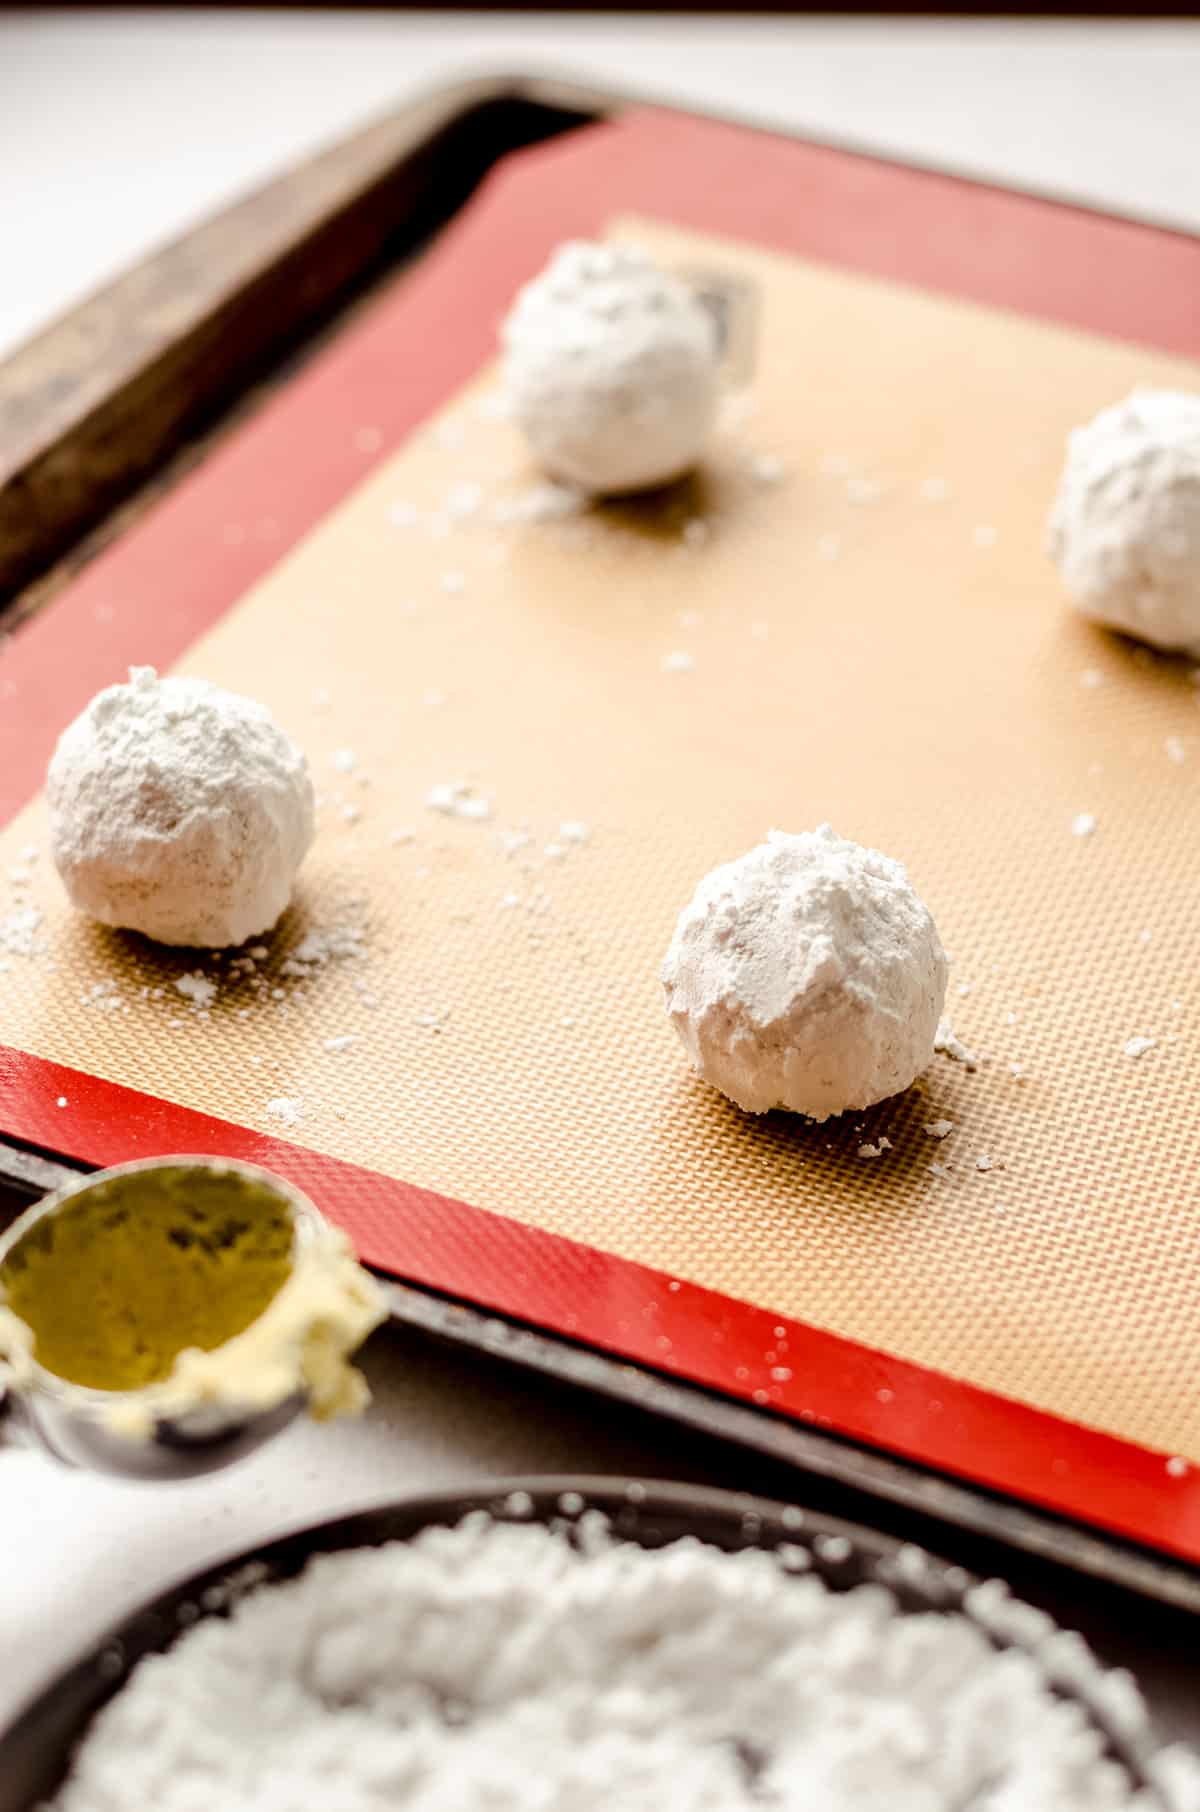 lemon crinkle cookie dough balls coated in powdered sugar on a baking sheet